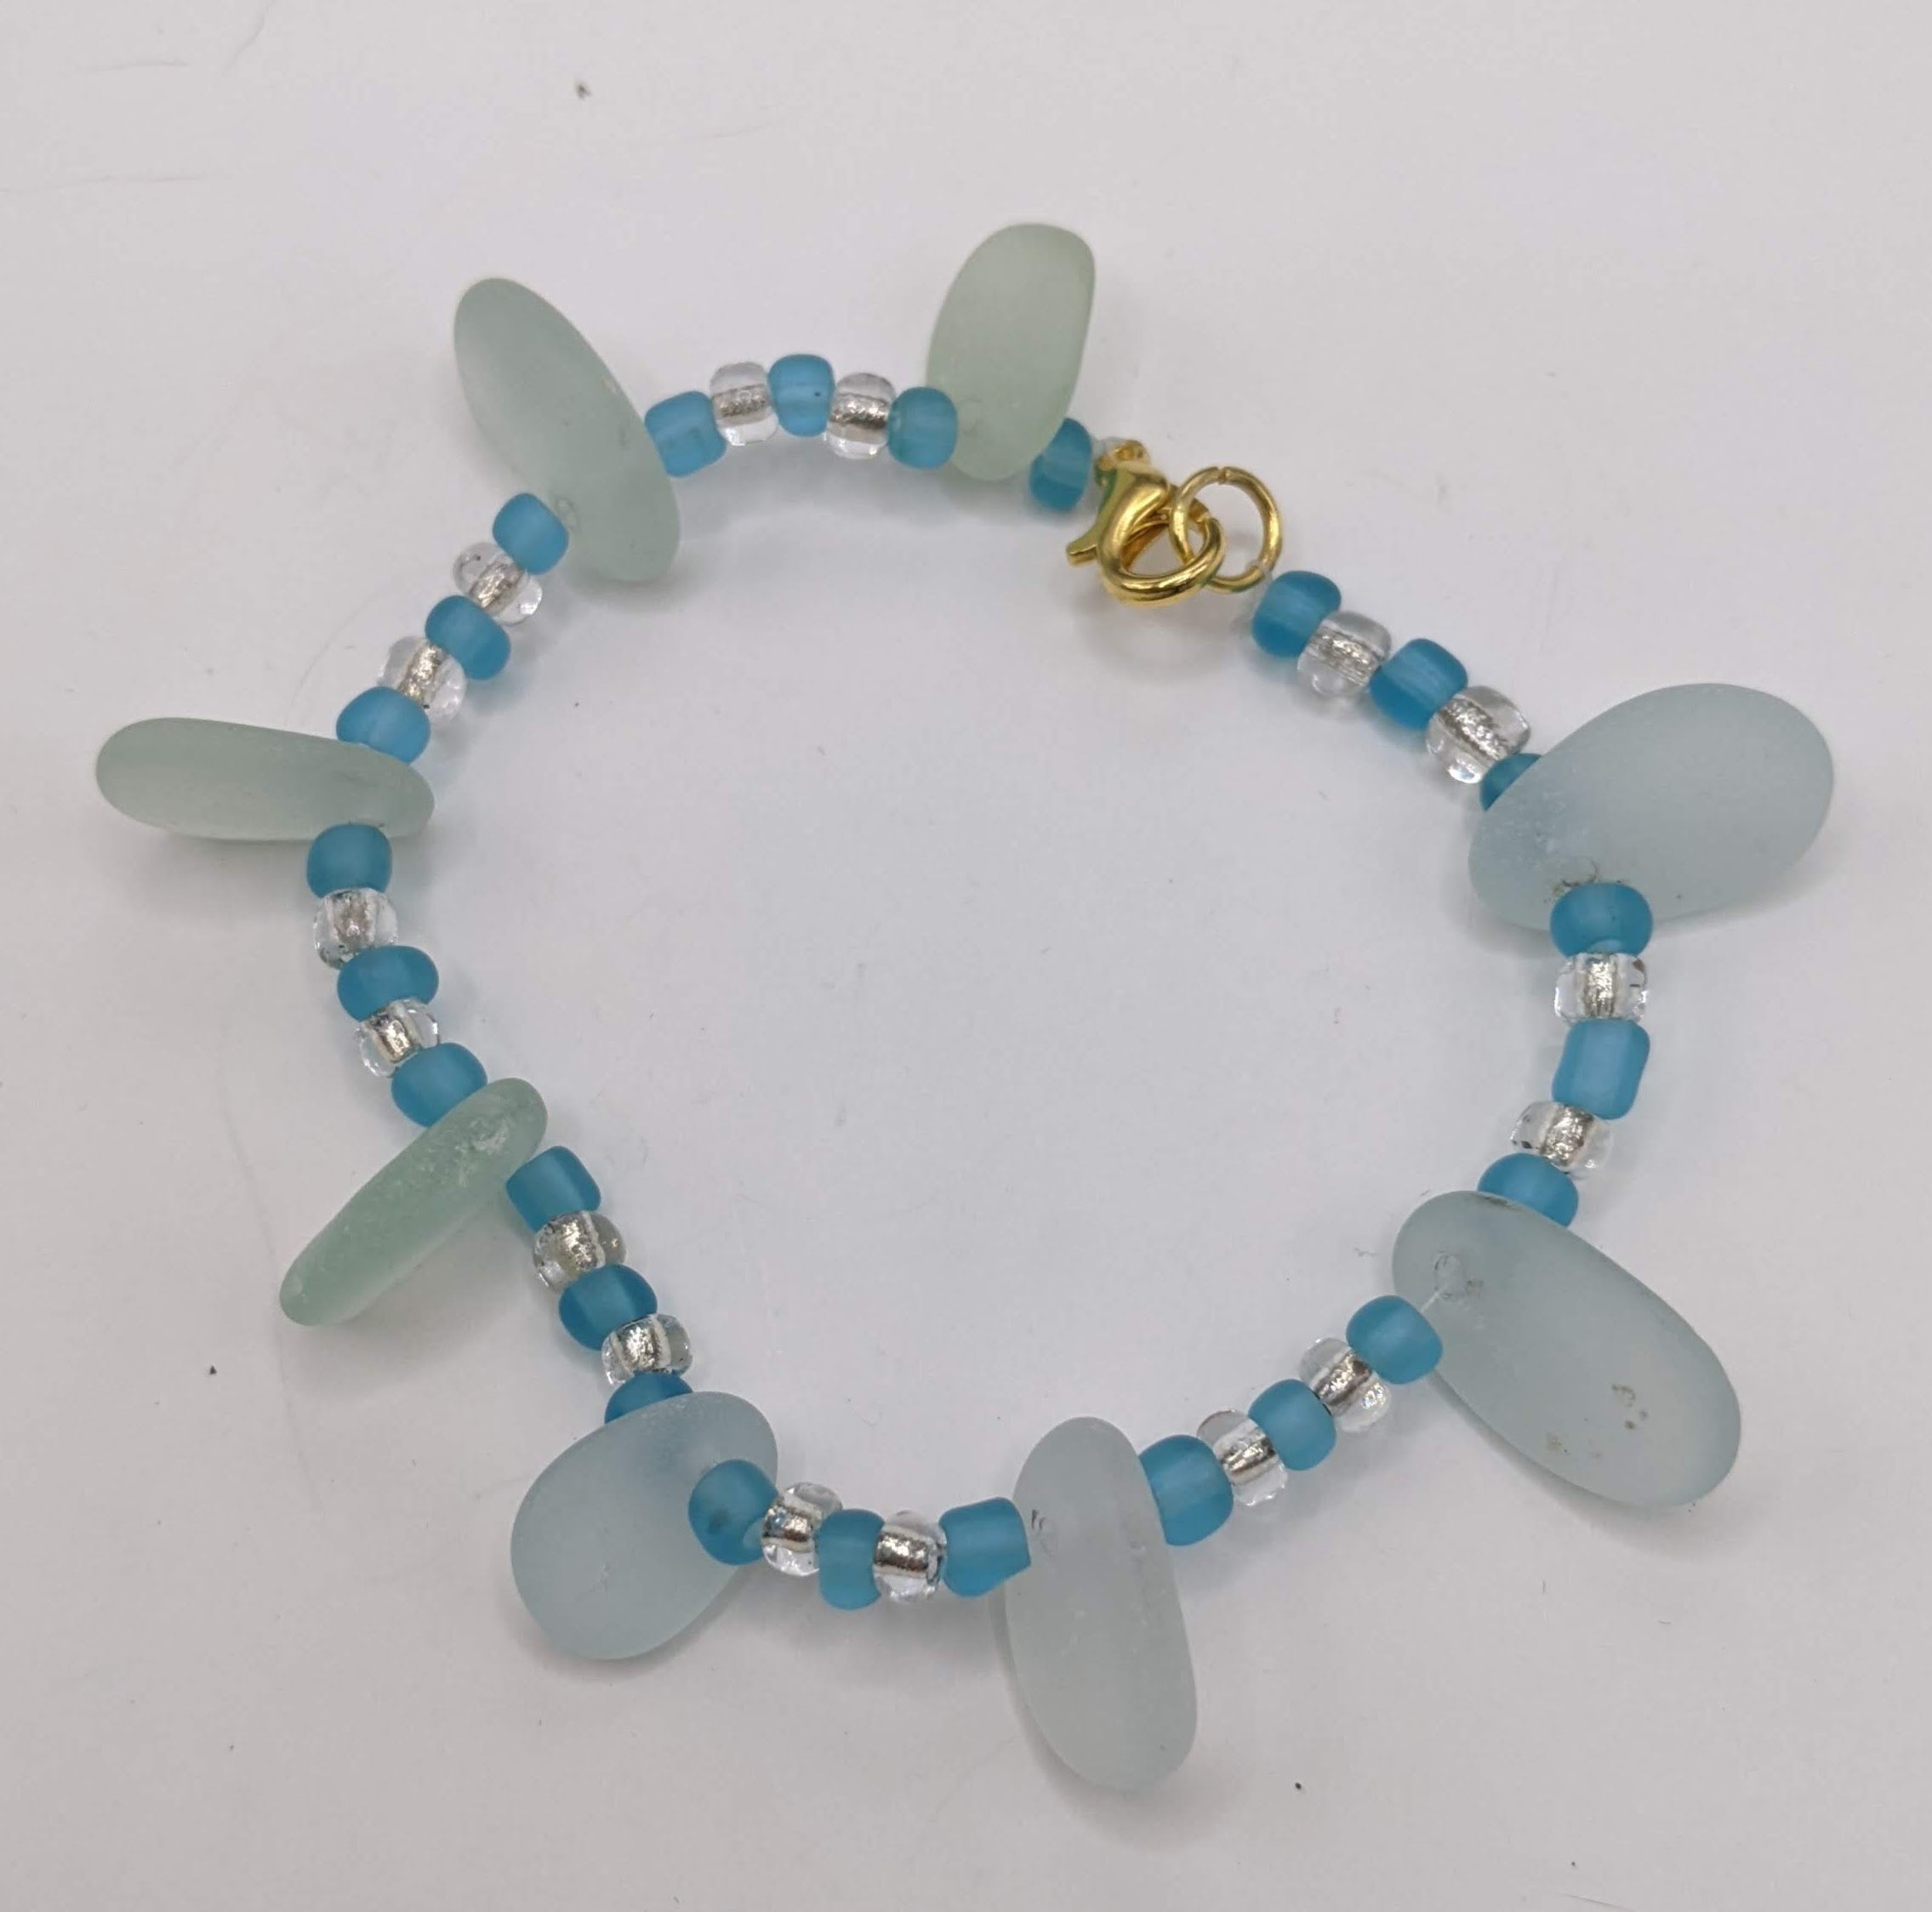 Seafoam seaglass and aqua beads bracelet